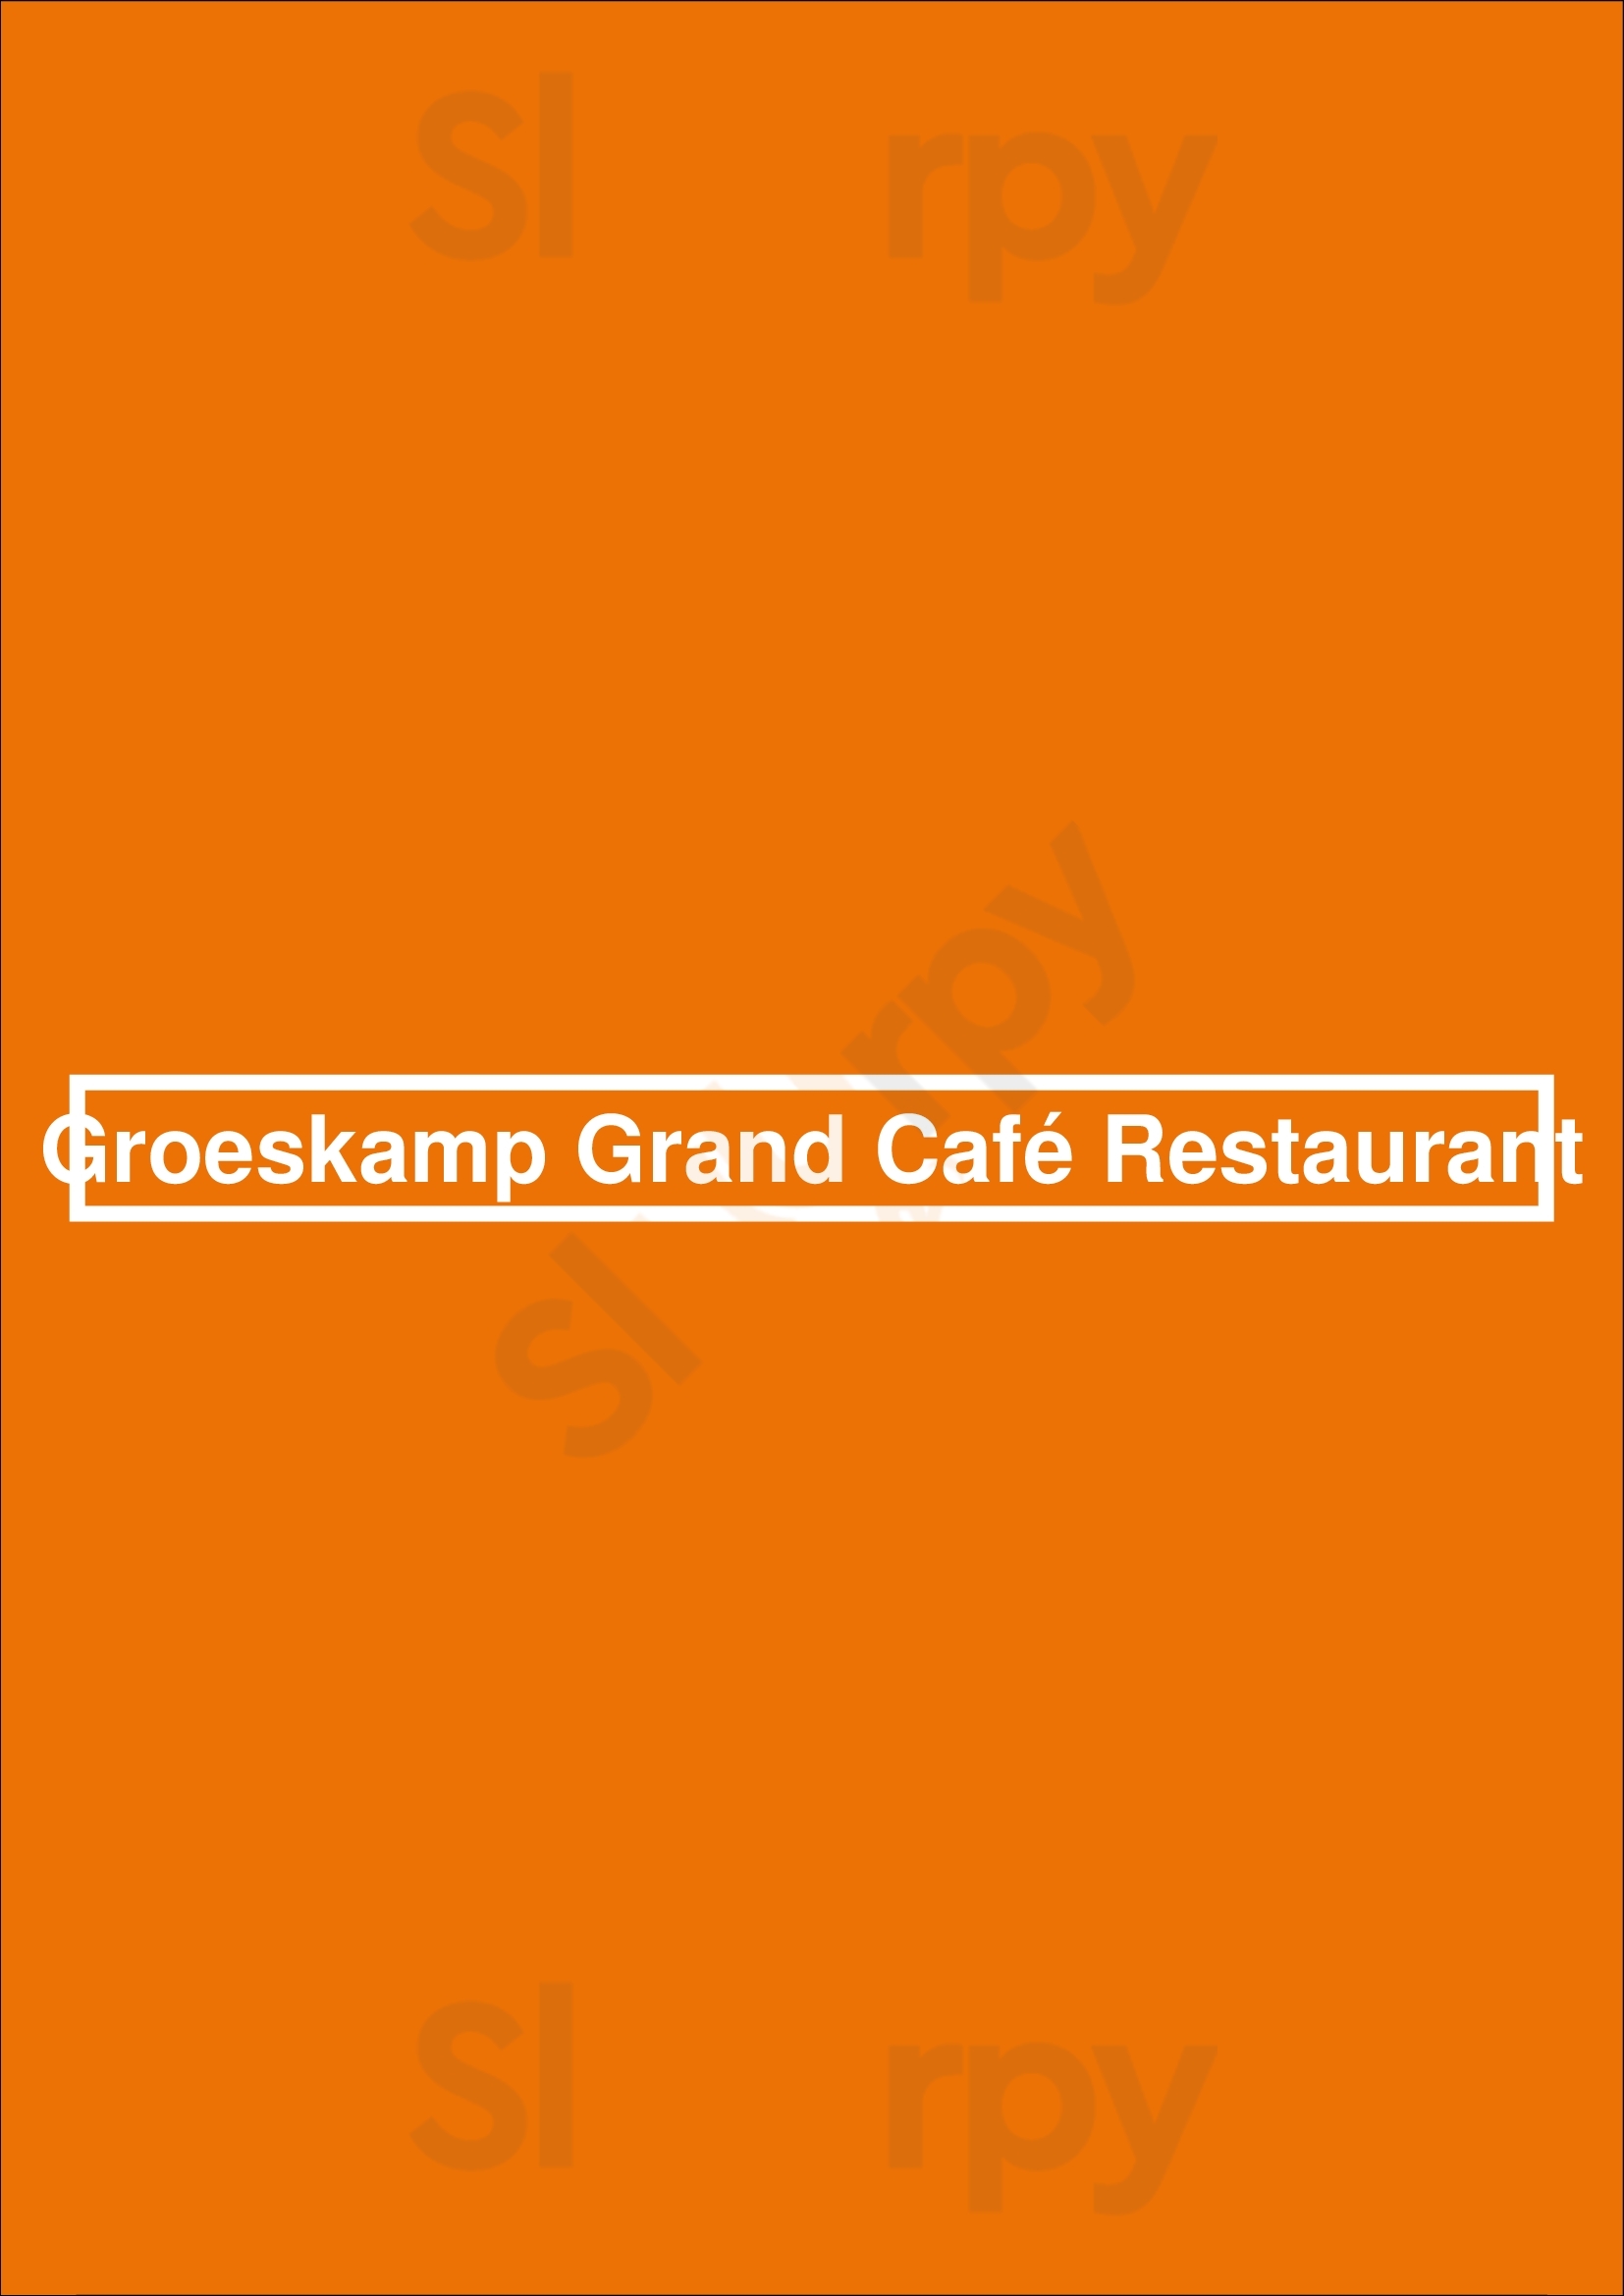 Groeskamp Grand Café Restaurant Doetinchem Menu - 1